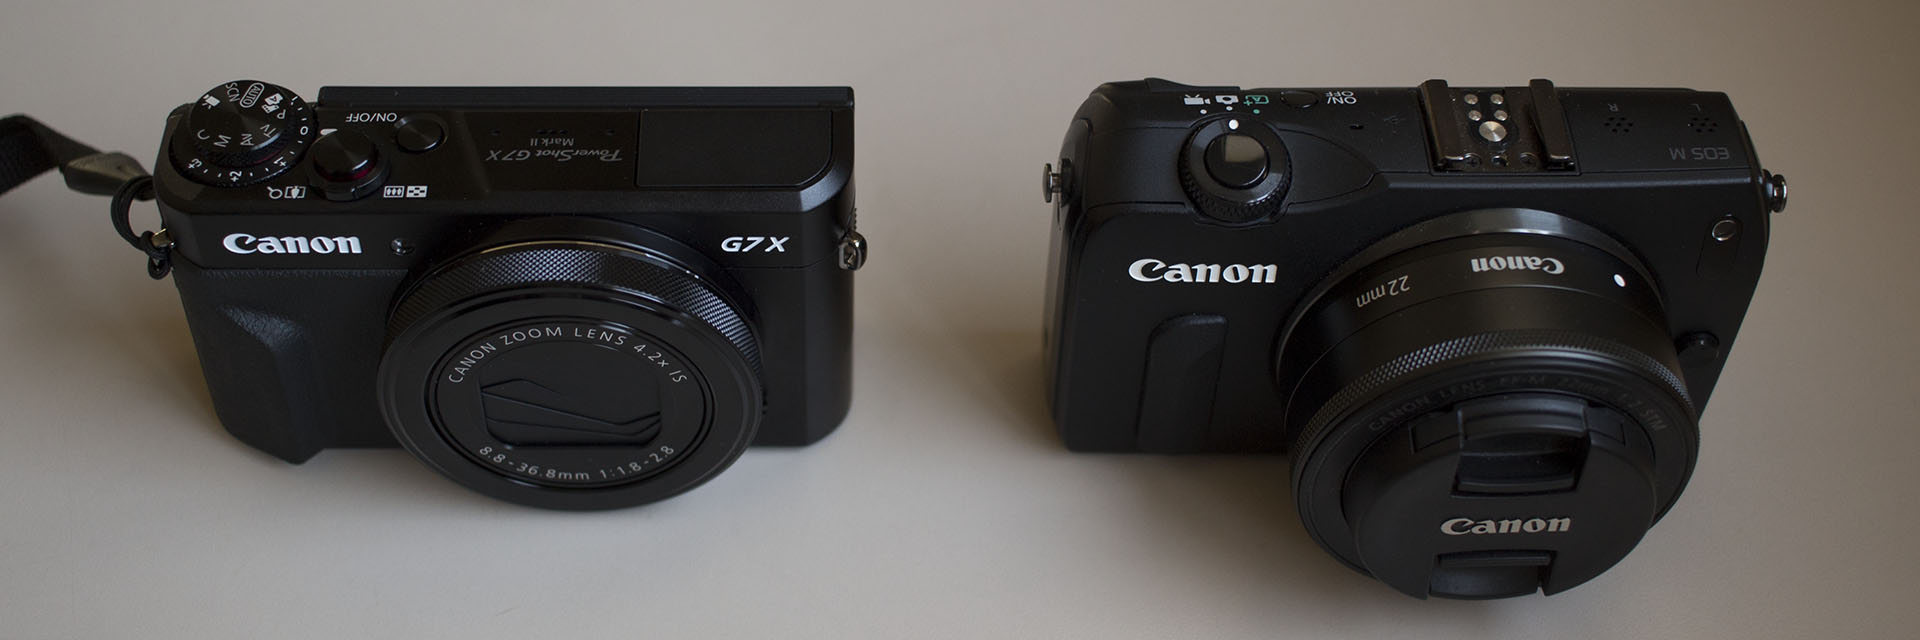 Canon PowerShot G7X Mark II – Cheaper Malice